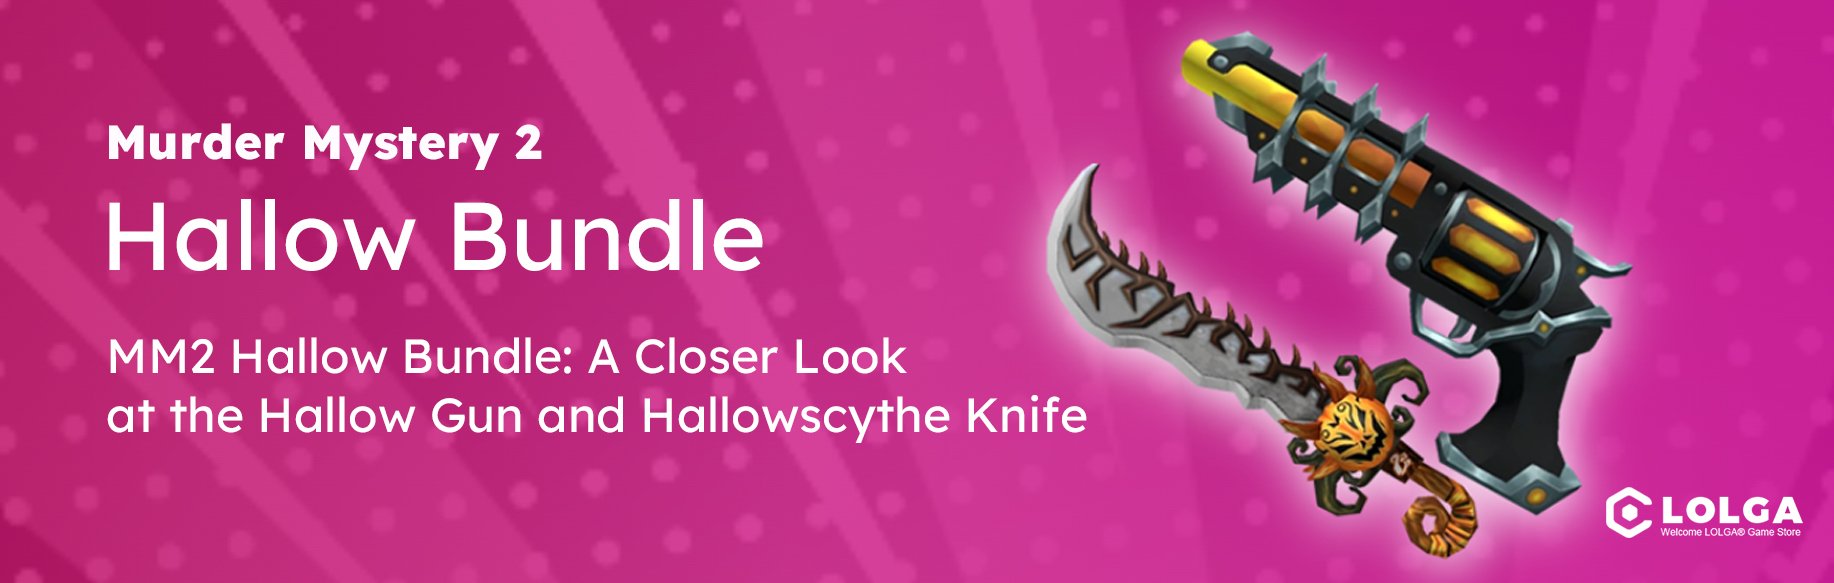 MM2 Hallow Bundle: A Closer Look at the Hallow Gun and Hallowscythe Knife